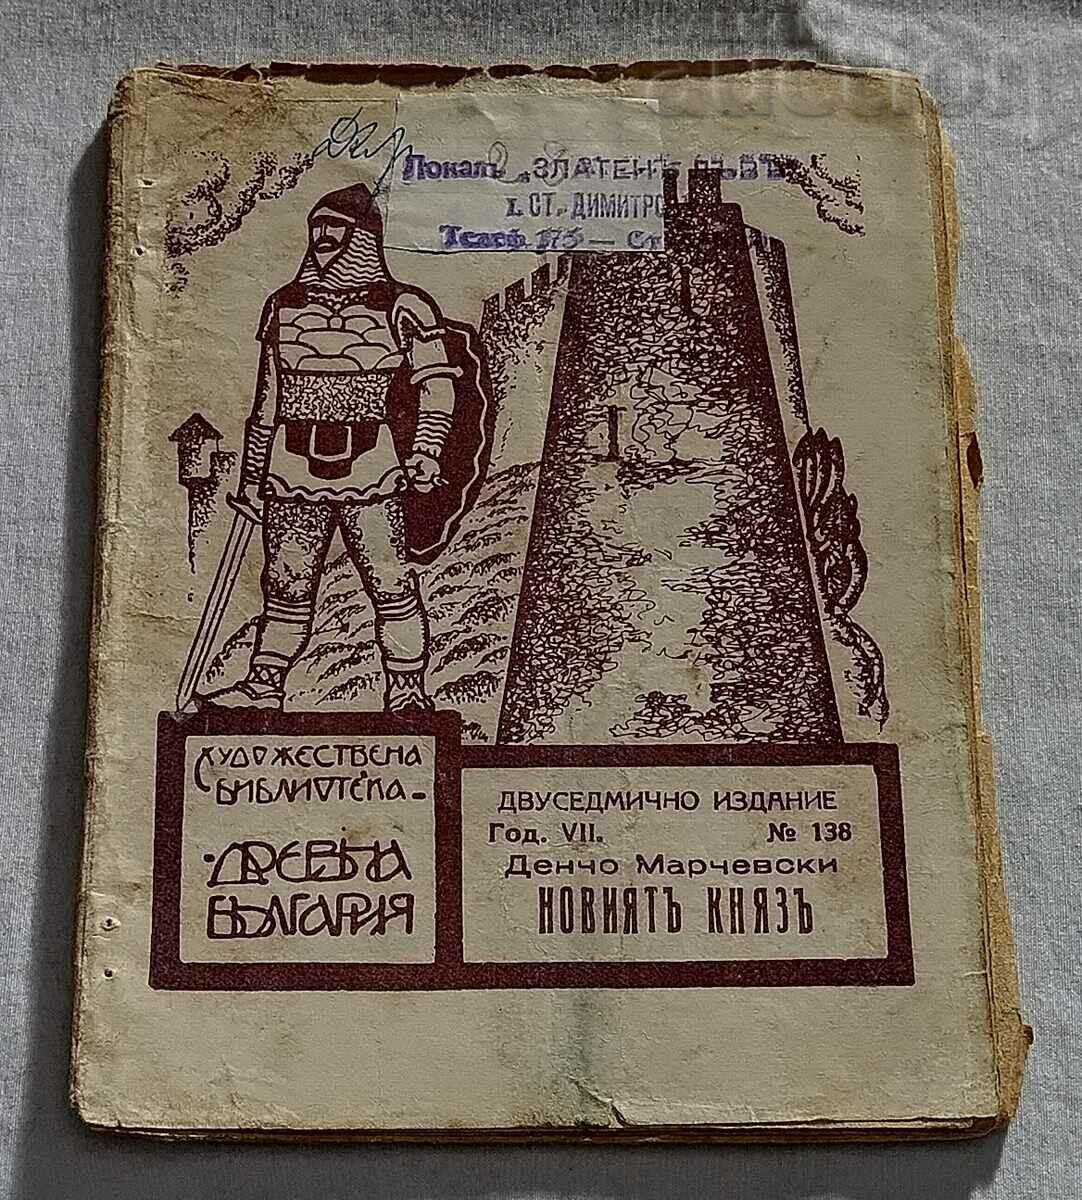 НОВИЯТ КНЯЗ Д.МАРЧЕВСКИ БИБЛ."ДРЕВНА БЪЛГАРИЯ" 1933 г.